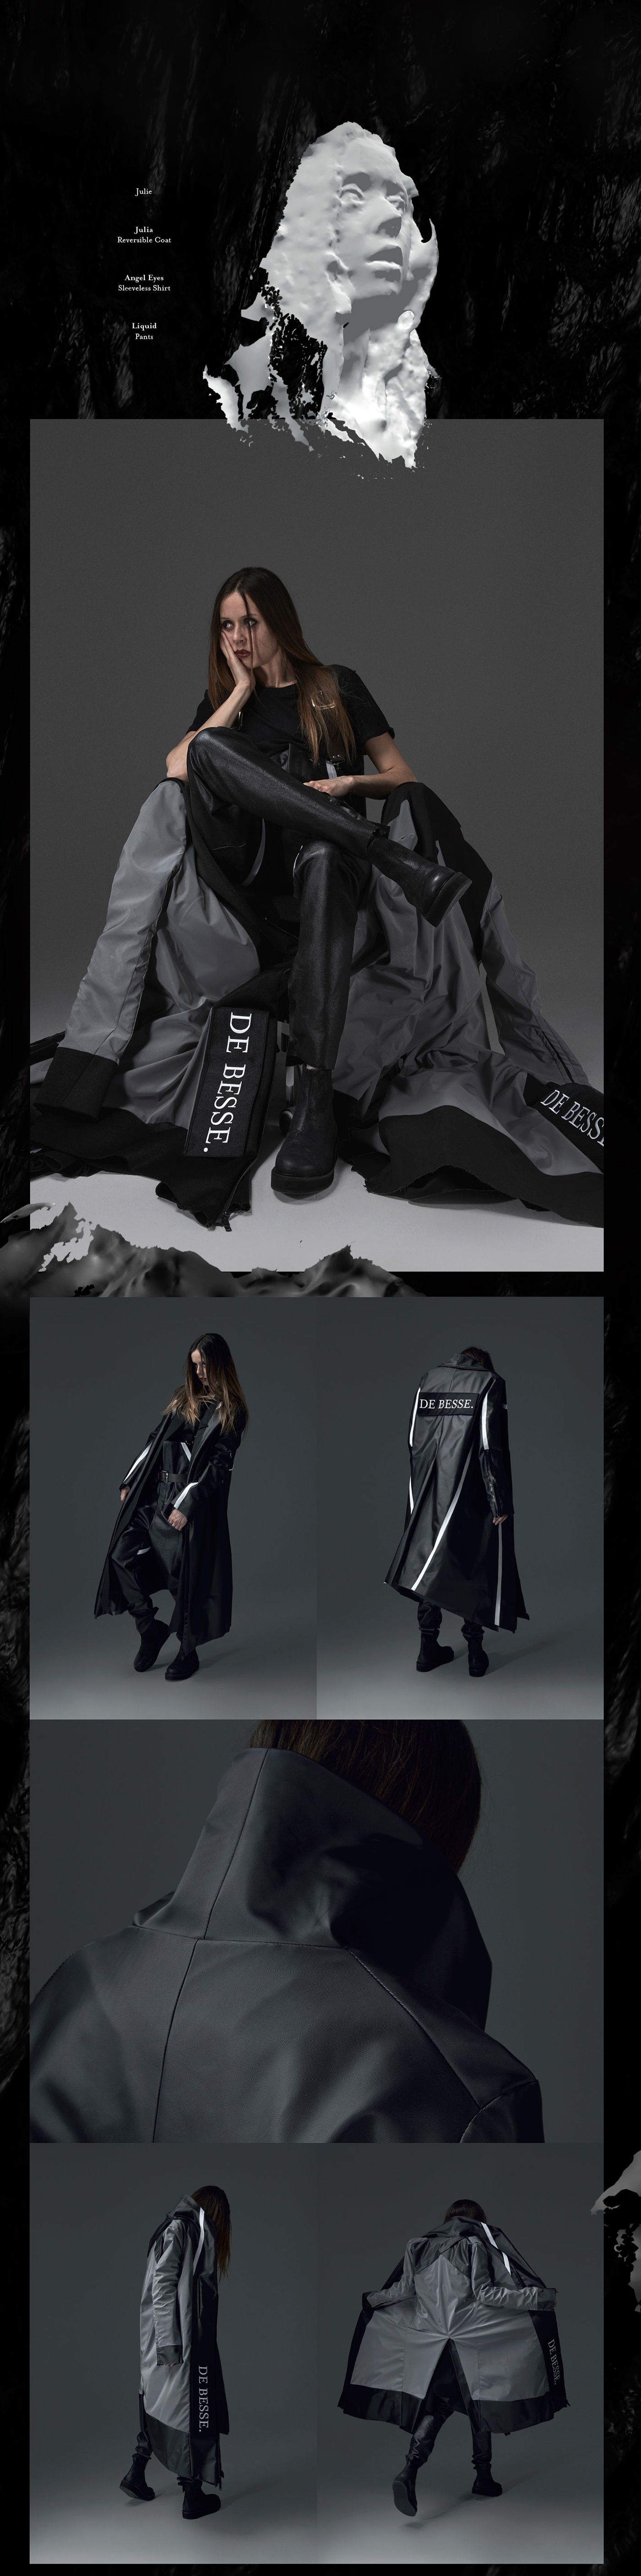 Style Clothing dark black De Besse nicolas garbit patrick garbit robin guittat outfit outwear geometry symmetry identity black and white monochrome